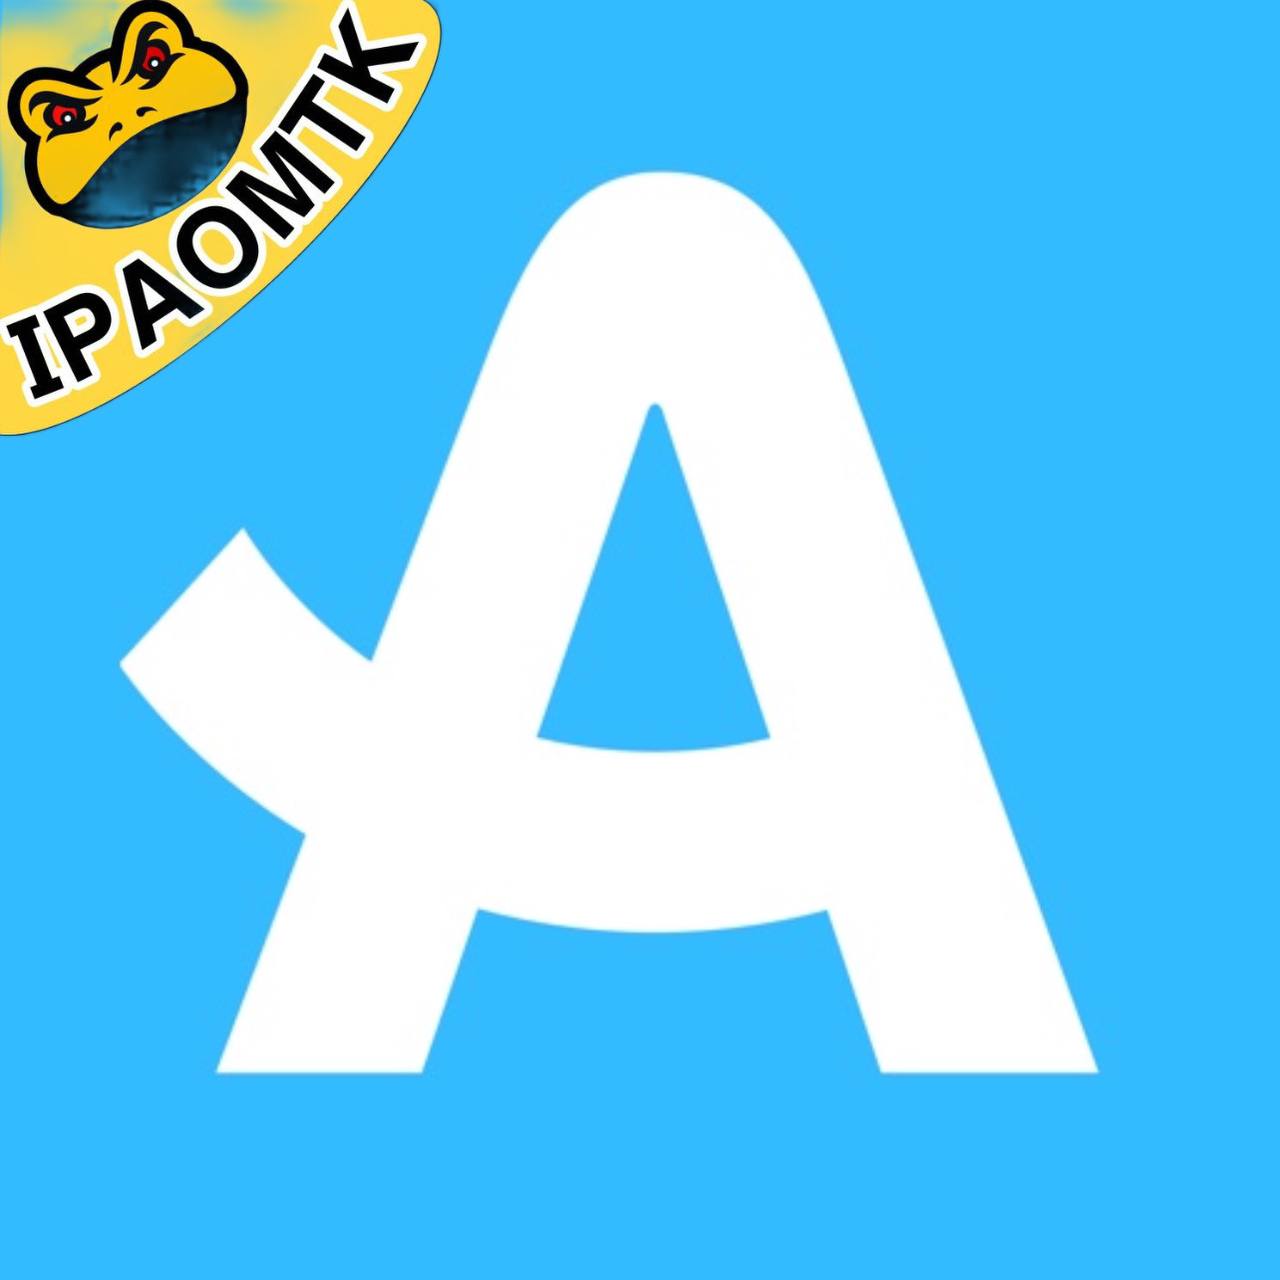 Aloha Browser iOS